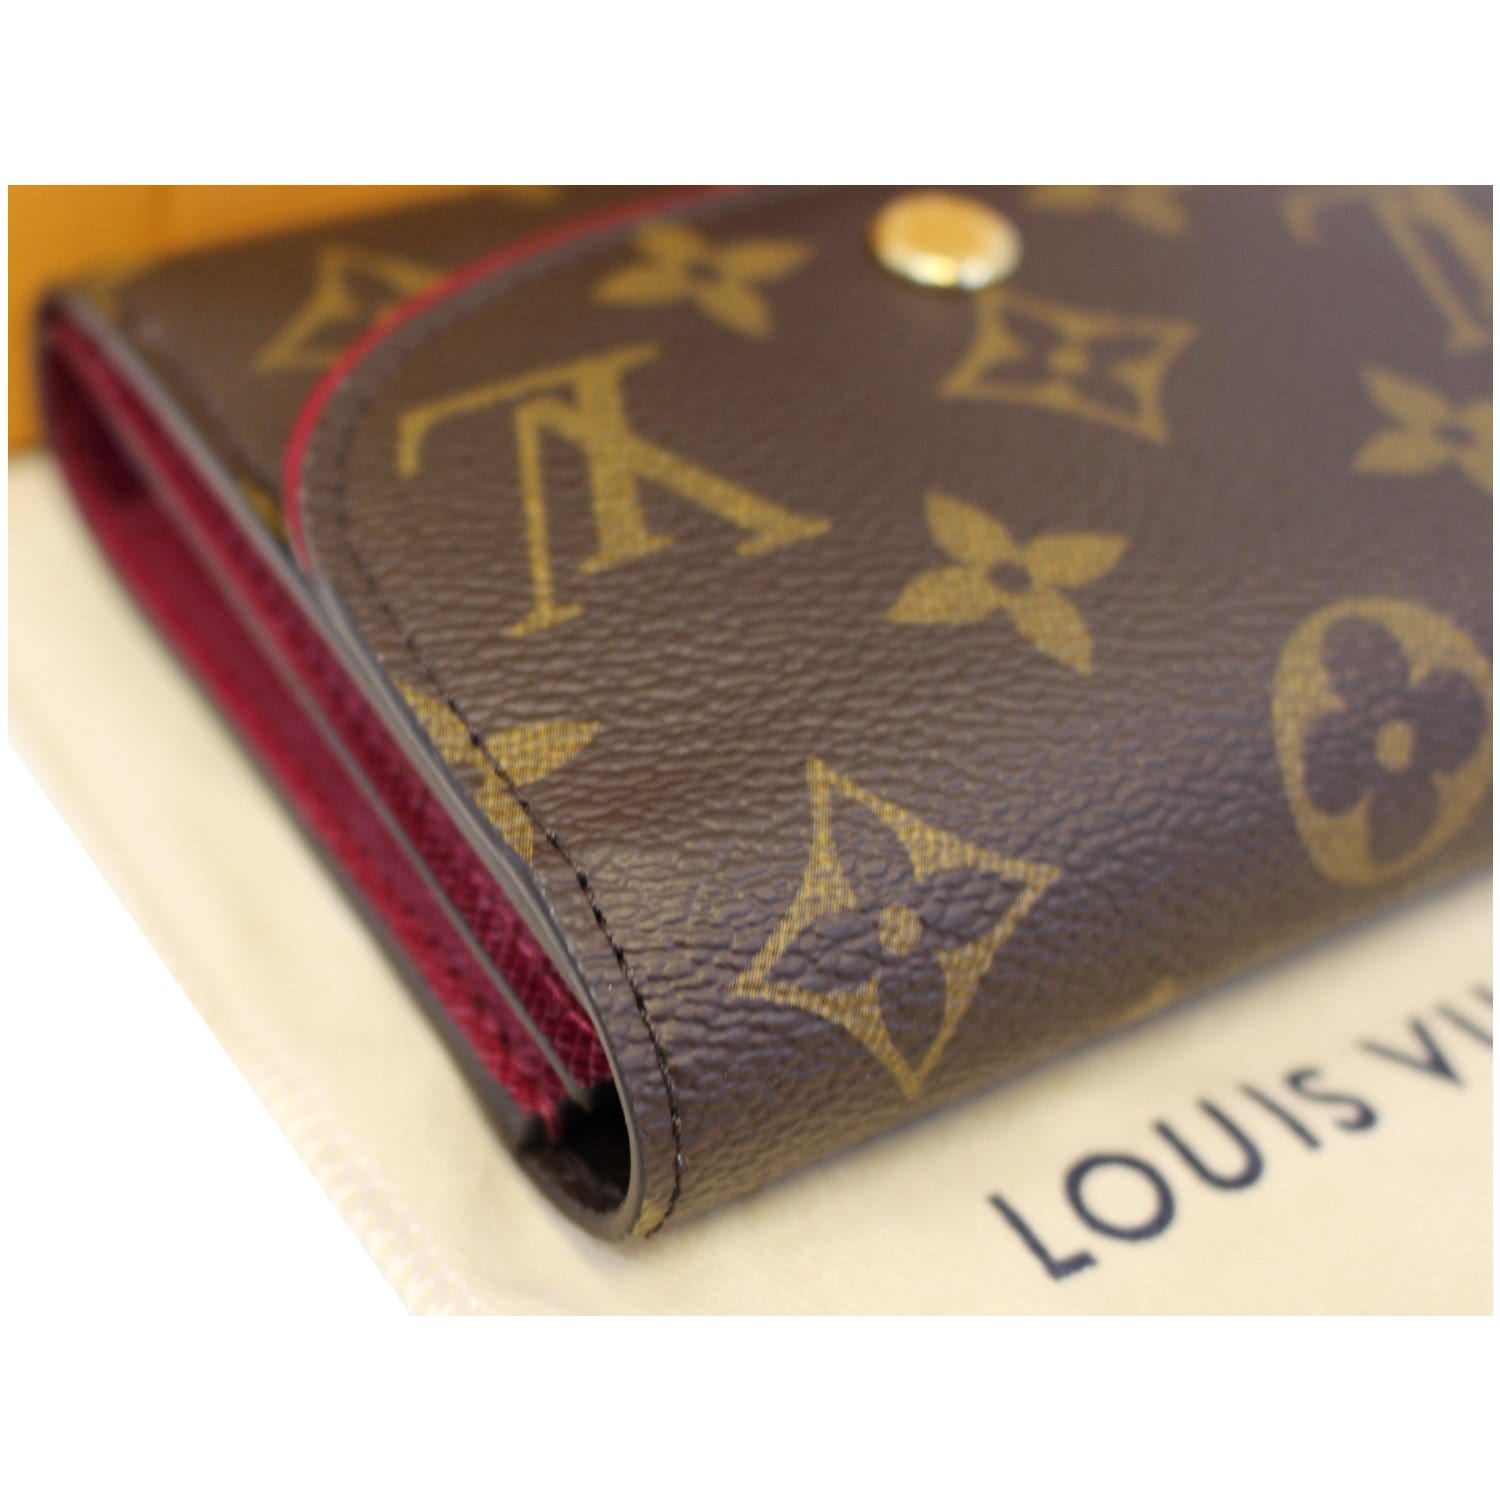 Louis Vuitton Monogram Ariane Compact Wallet Fuchsia